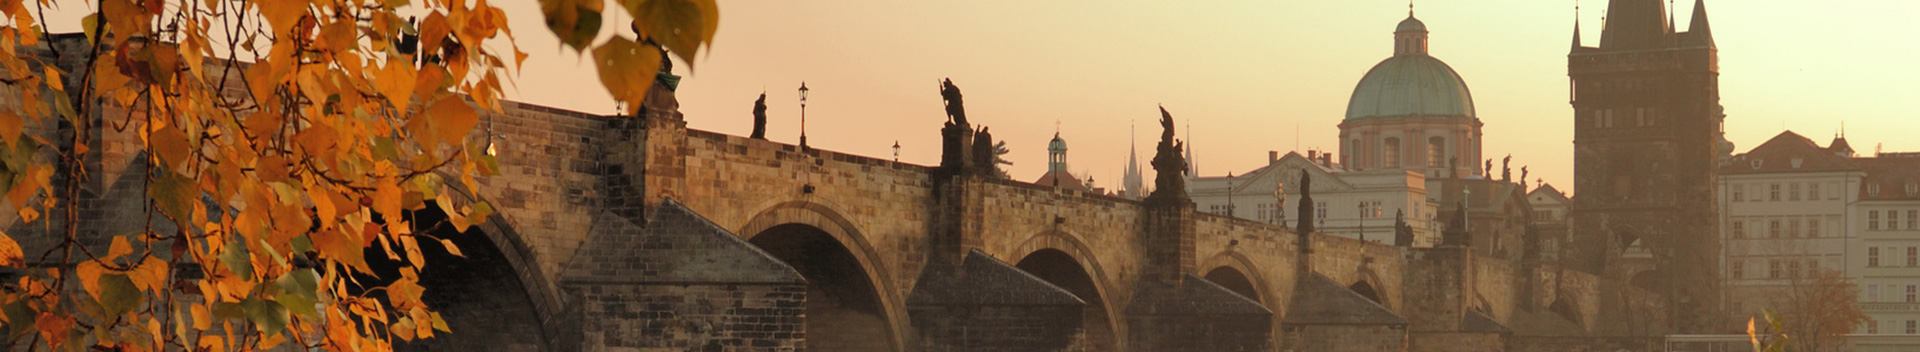 Czech Tours & Day Trips from Prague